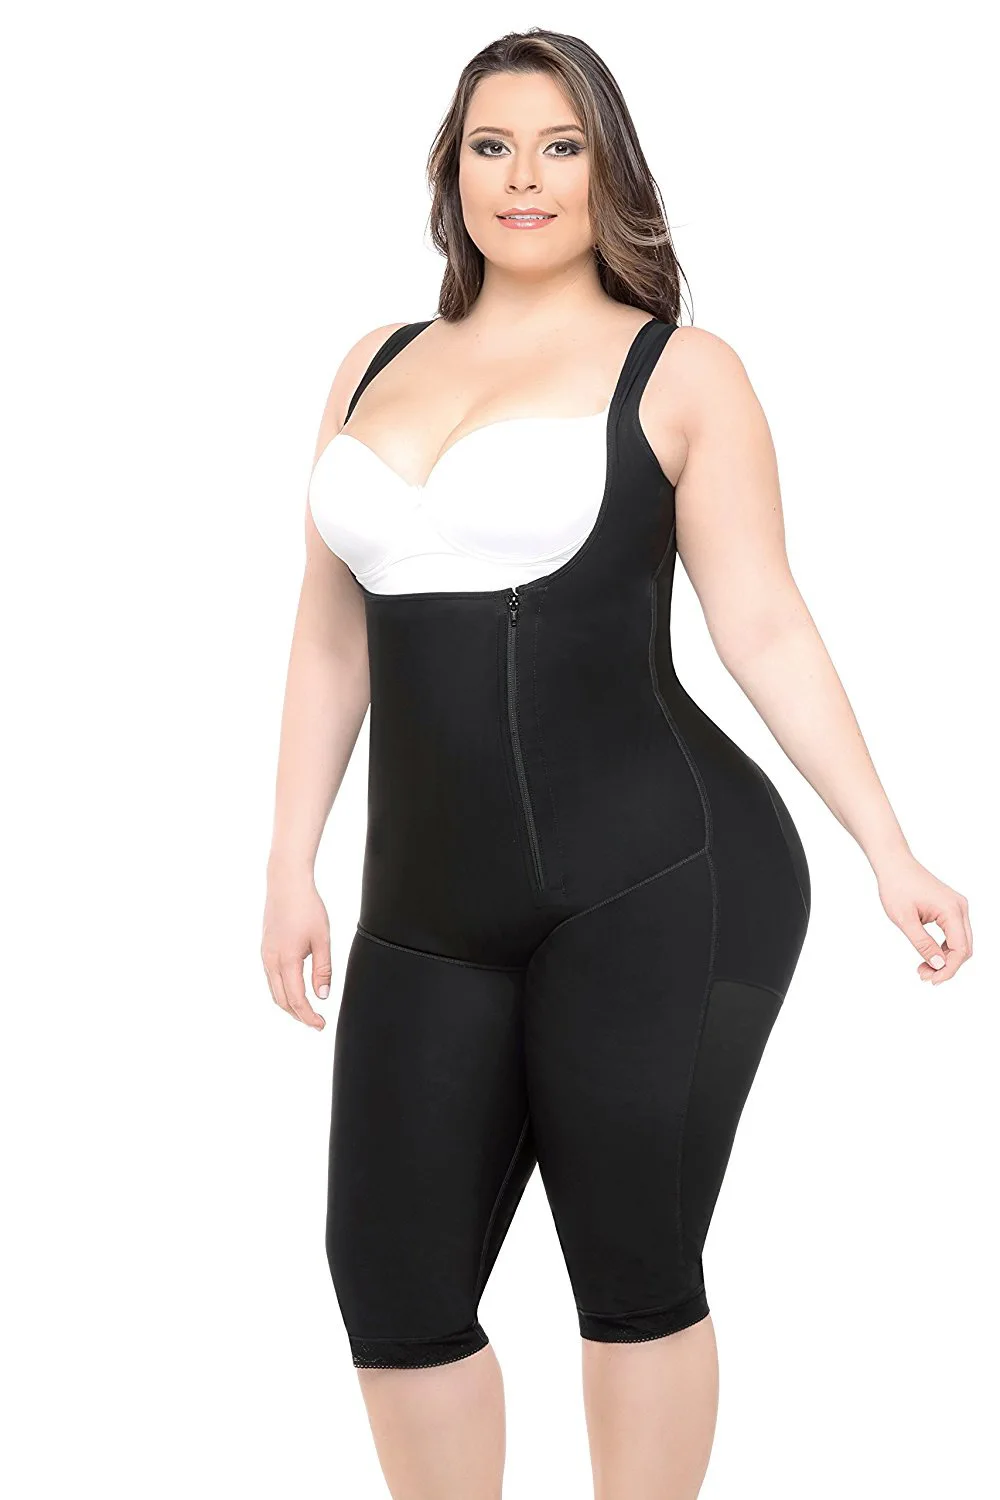 Fat Control Shapewear Full Body Bodysuits Women 6xl Plus Size Underwear